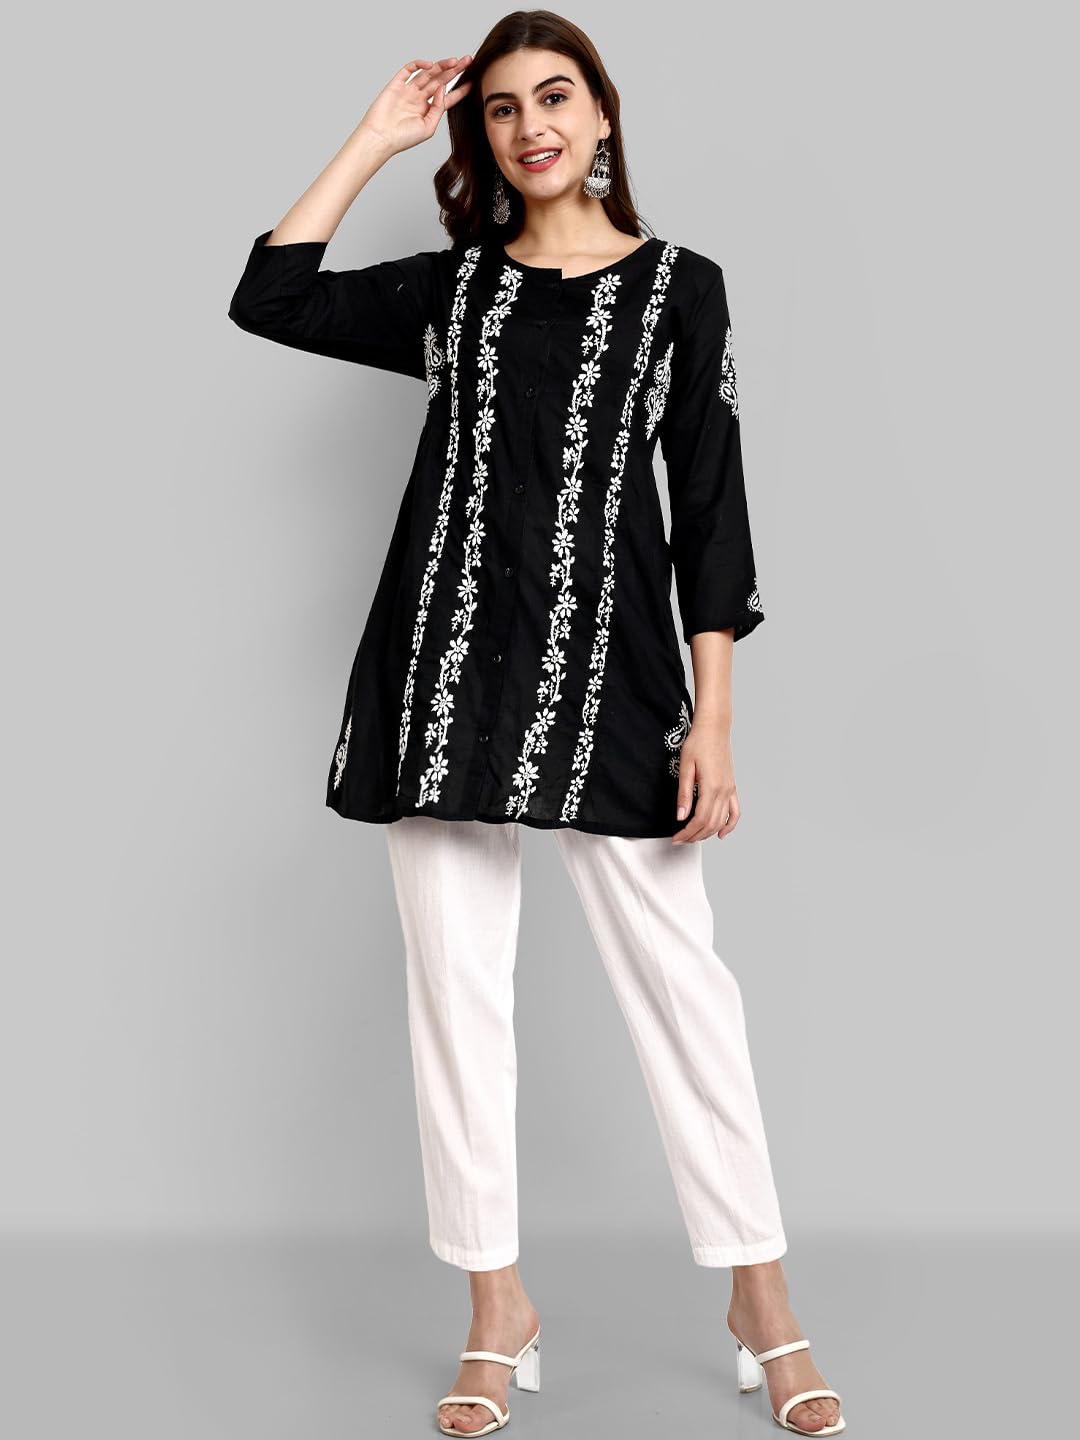 Ada Hand Embroidered Lucknowi Chikankari A-line Cotton Short Kurti Top for Women A911376 Black/White (L)